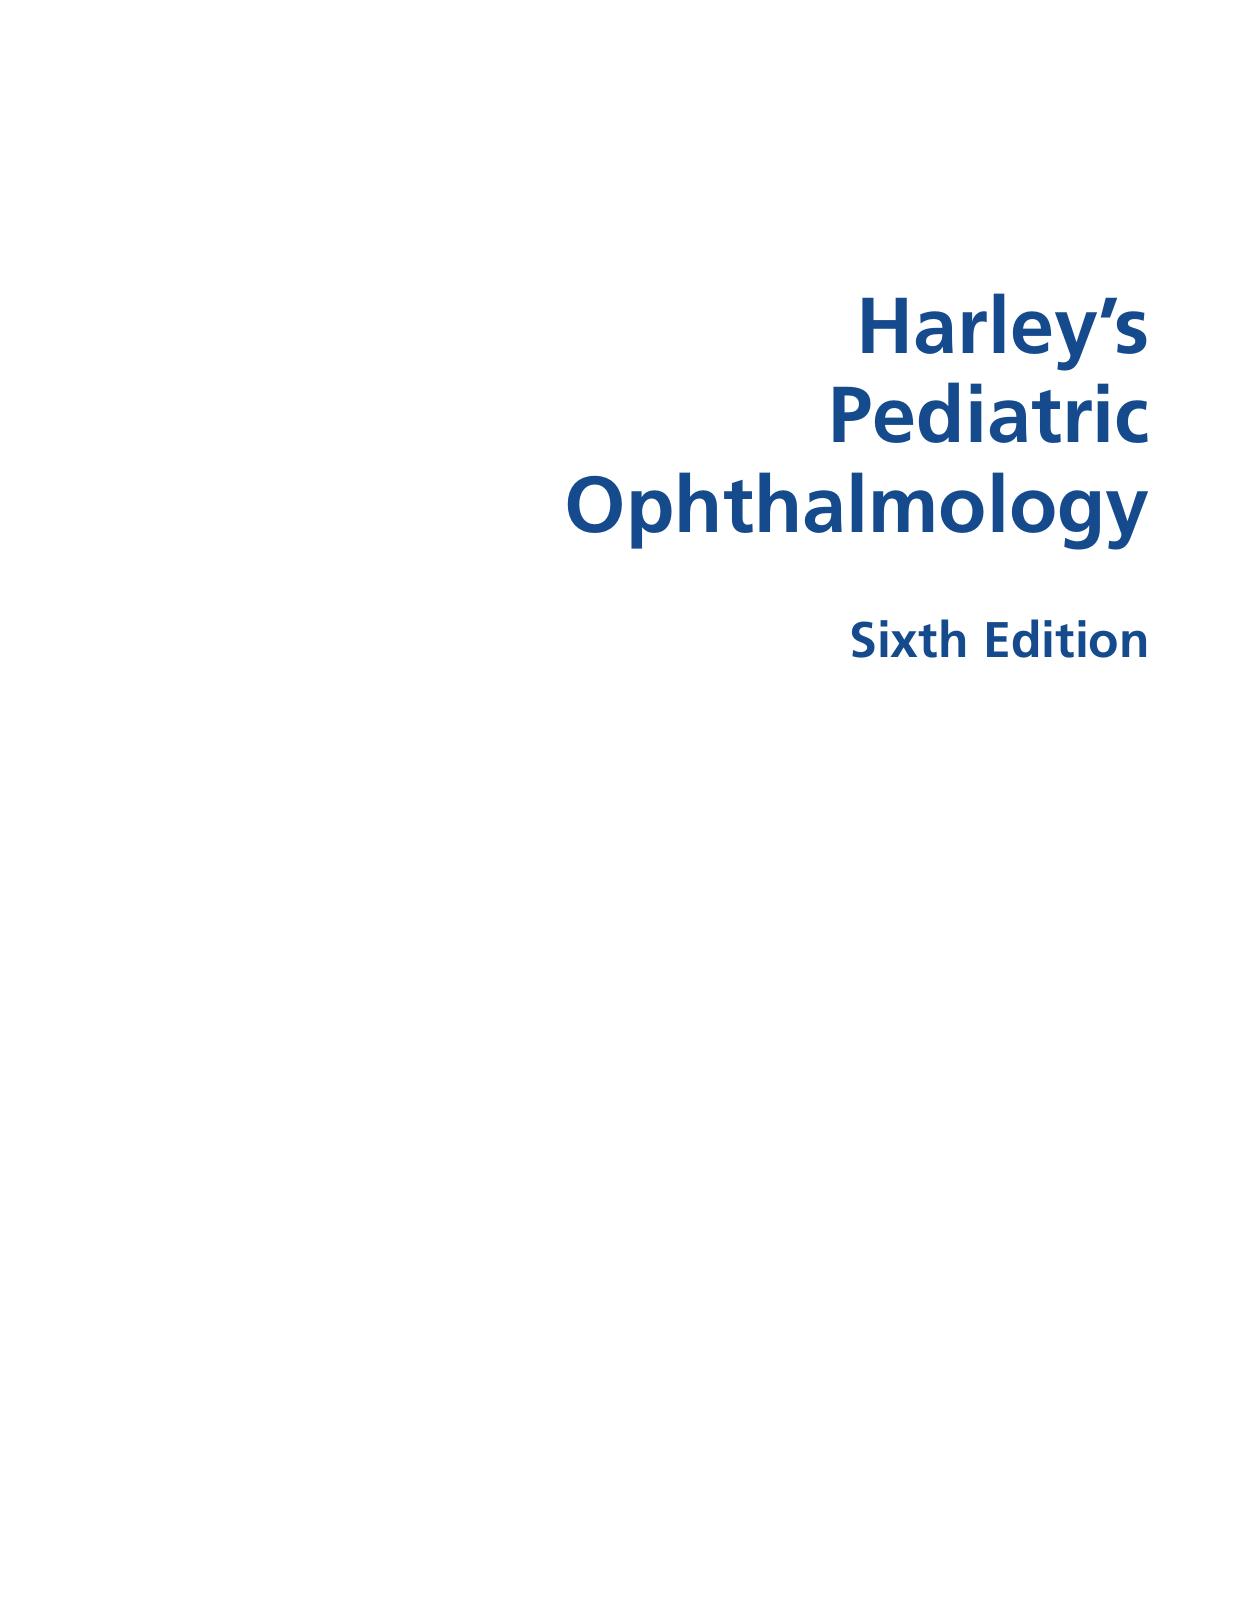 Harley's Pediatric Ophthalmology